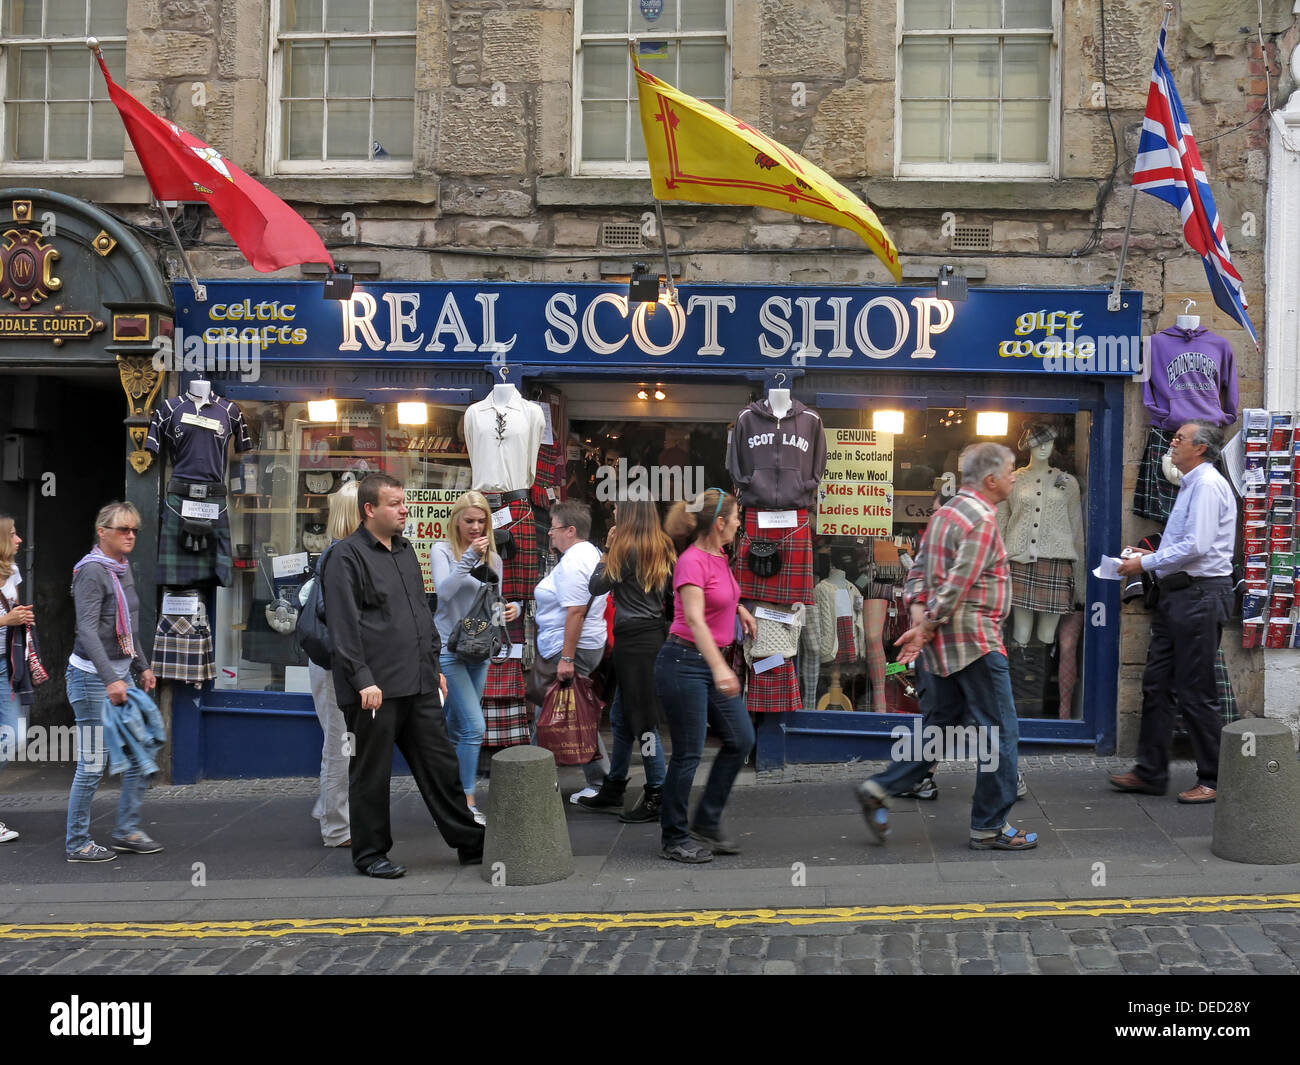 Celtic Crafts echter Schotte Shop Royal Mile Edinburgh Schottland Stockfoto